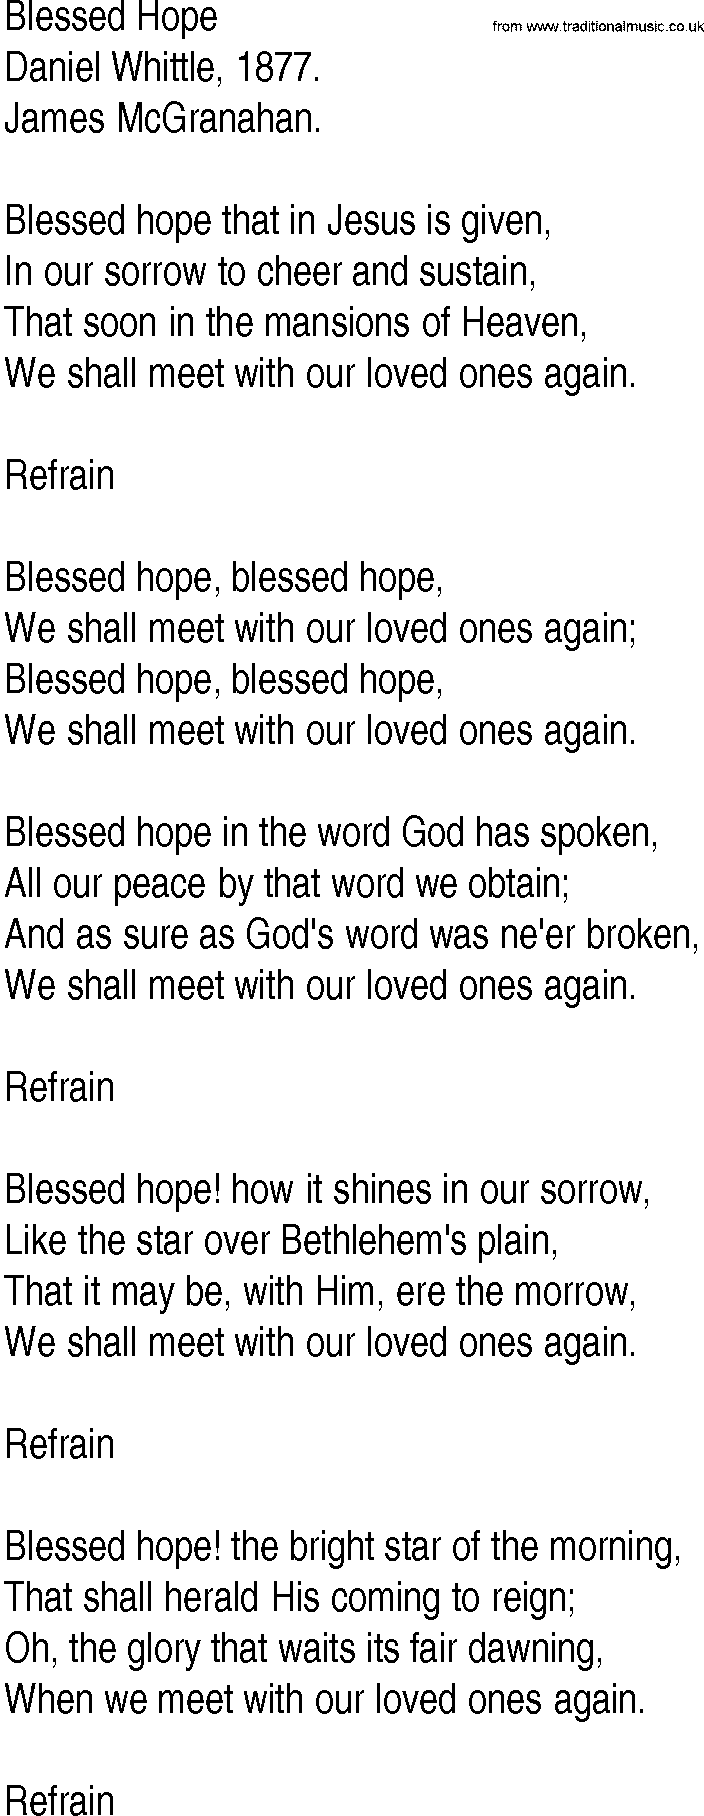 Hymn and Gospel Song: Blessed Hope by Daniel Whittle lyrics